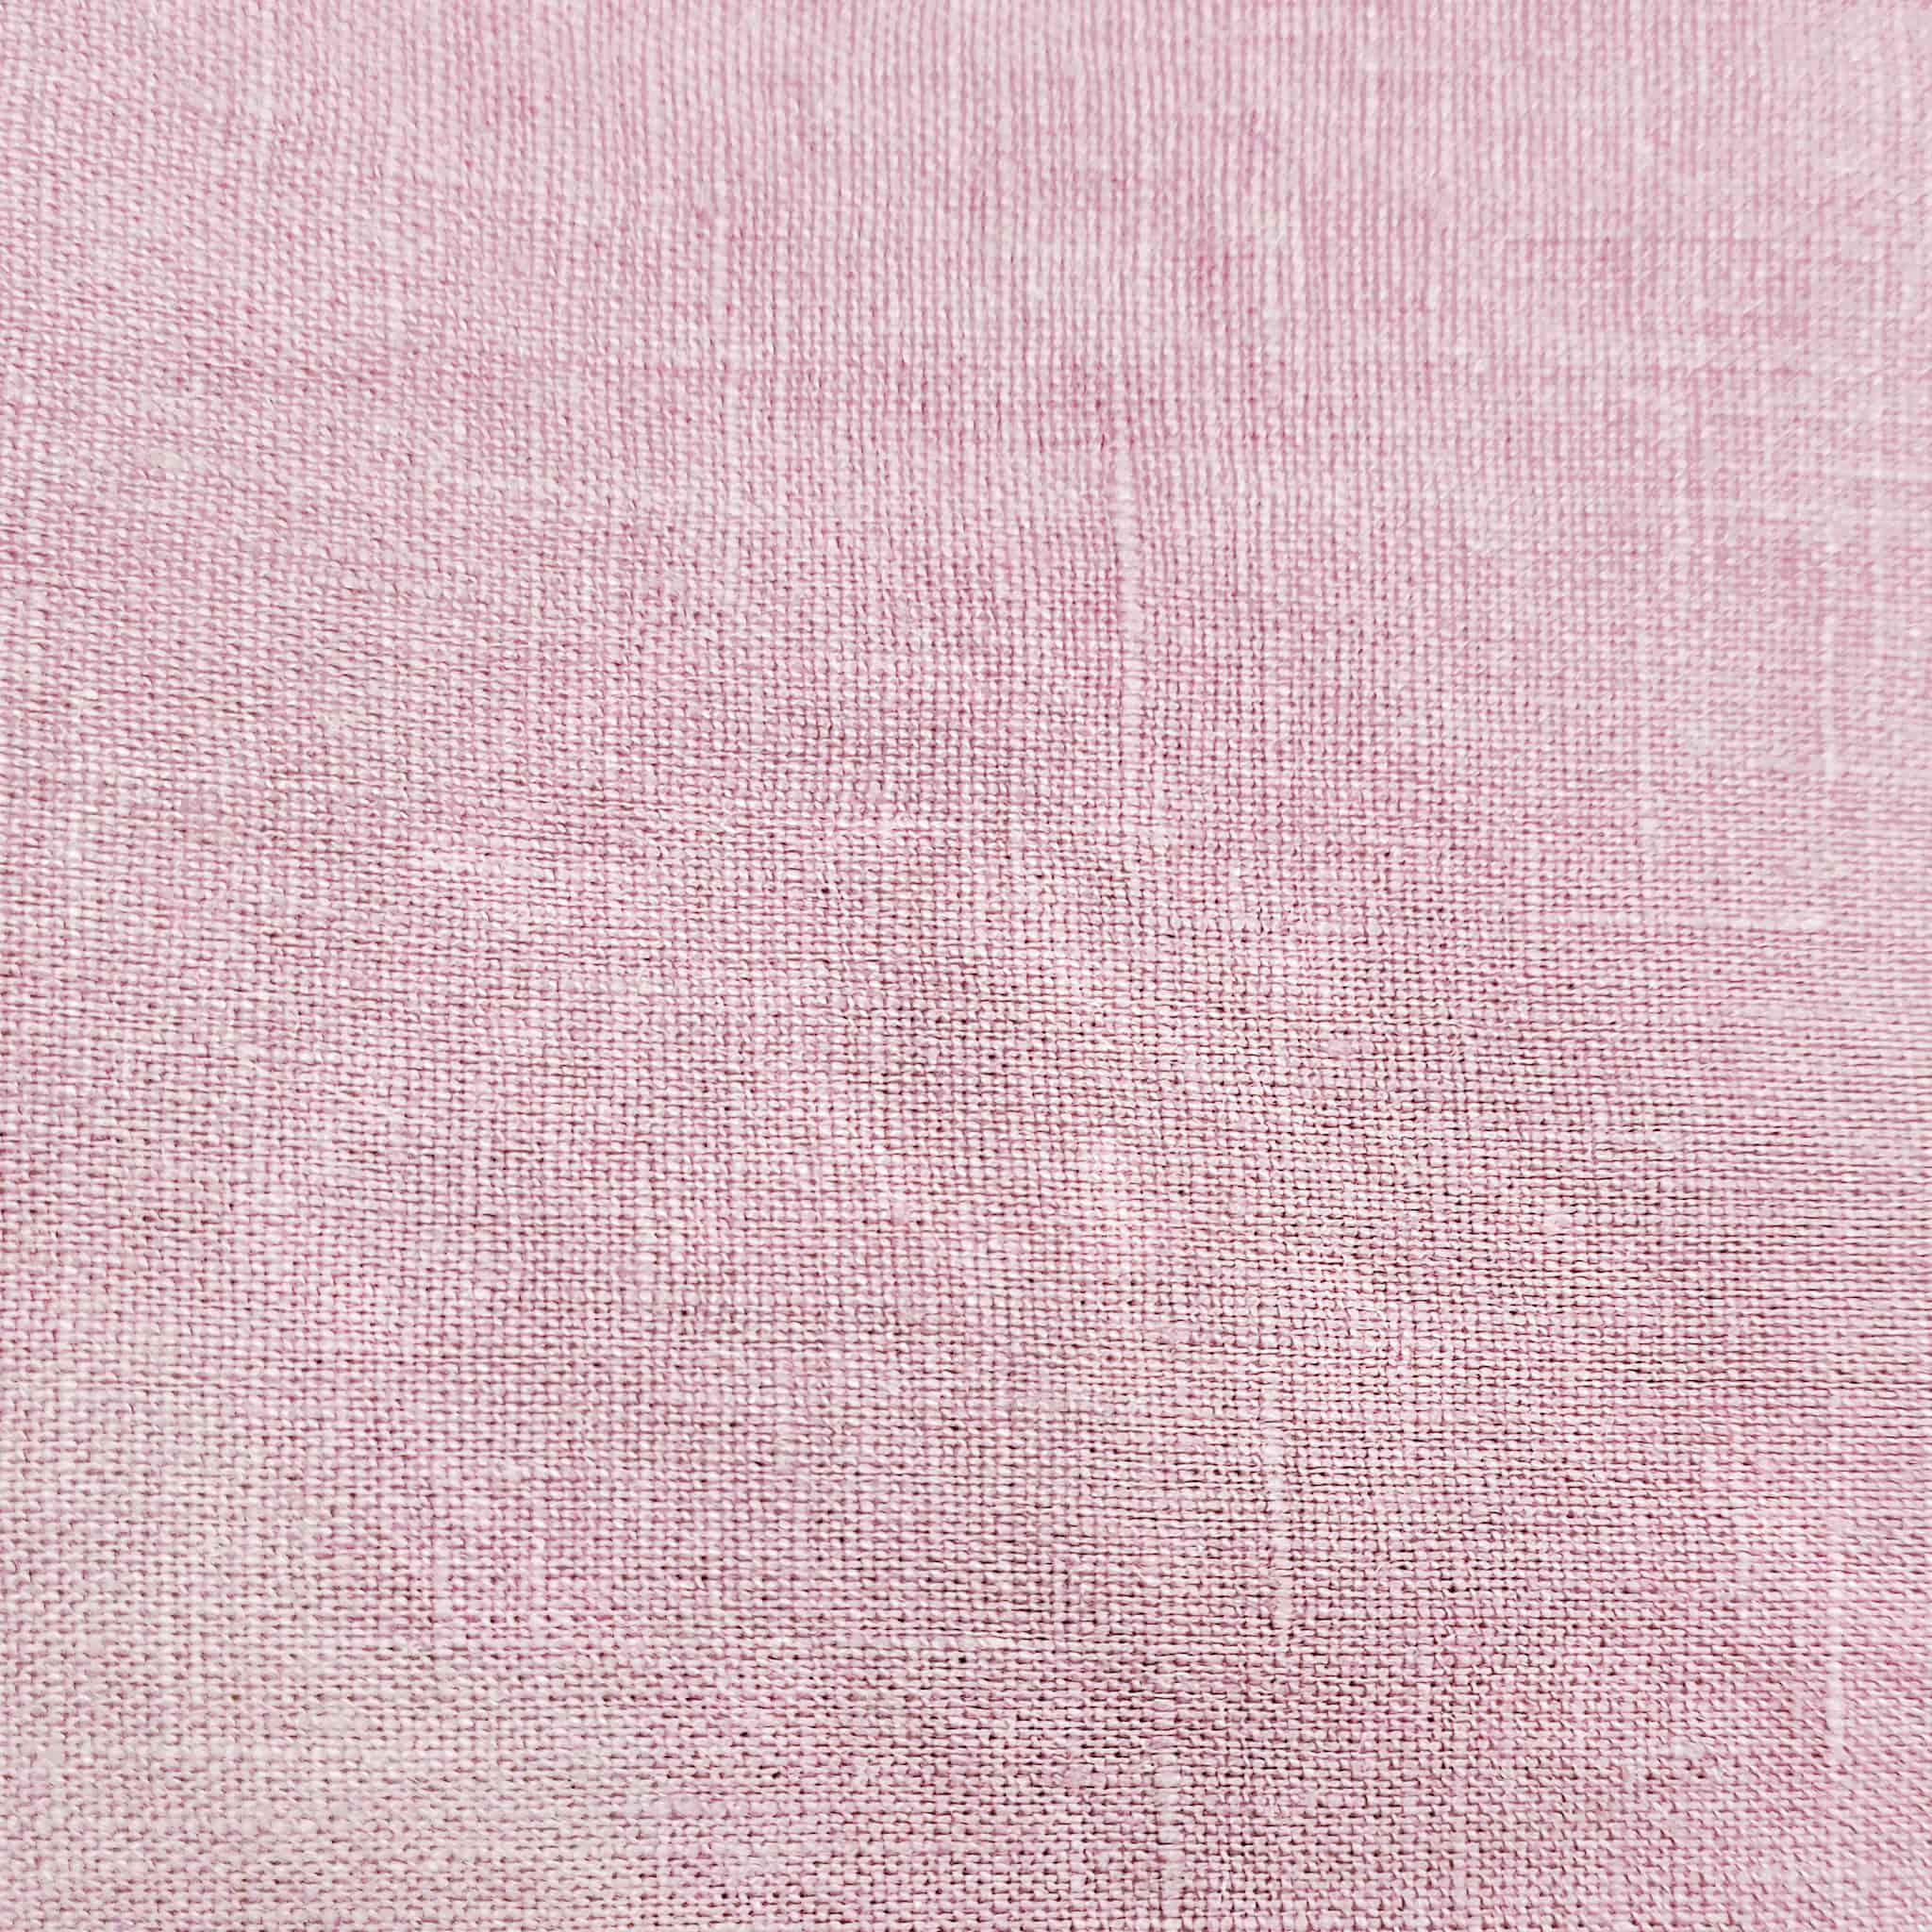 Soft Pink Linen Fitted Sheet